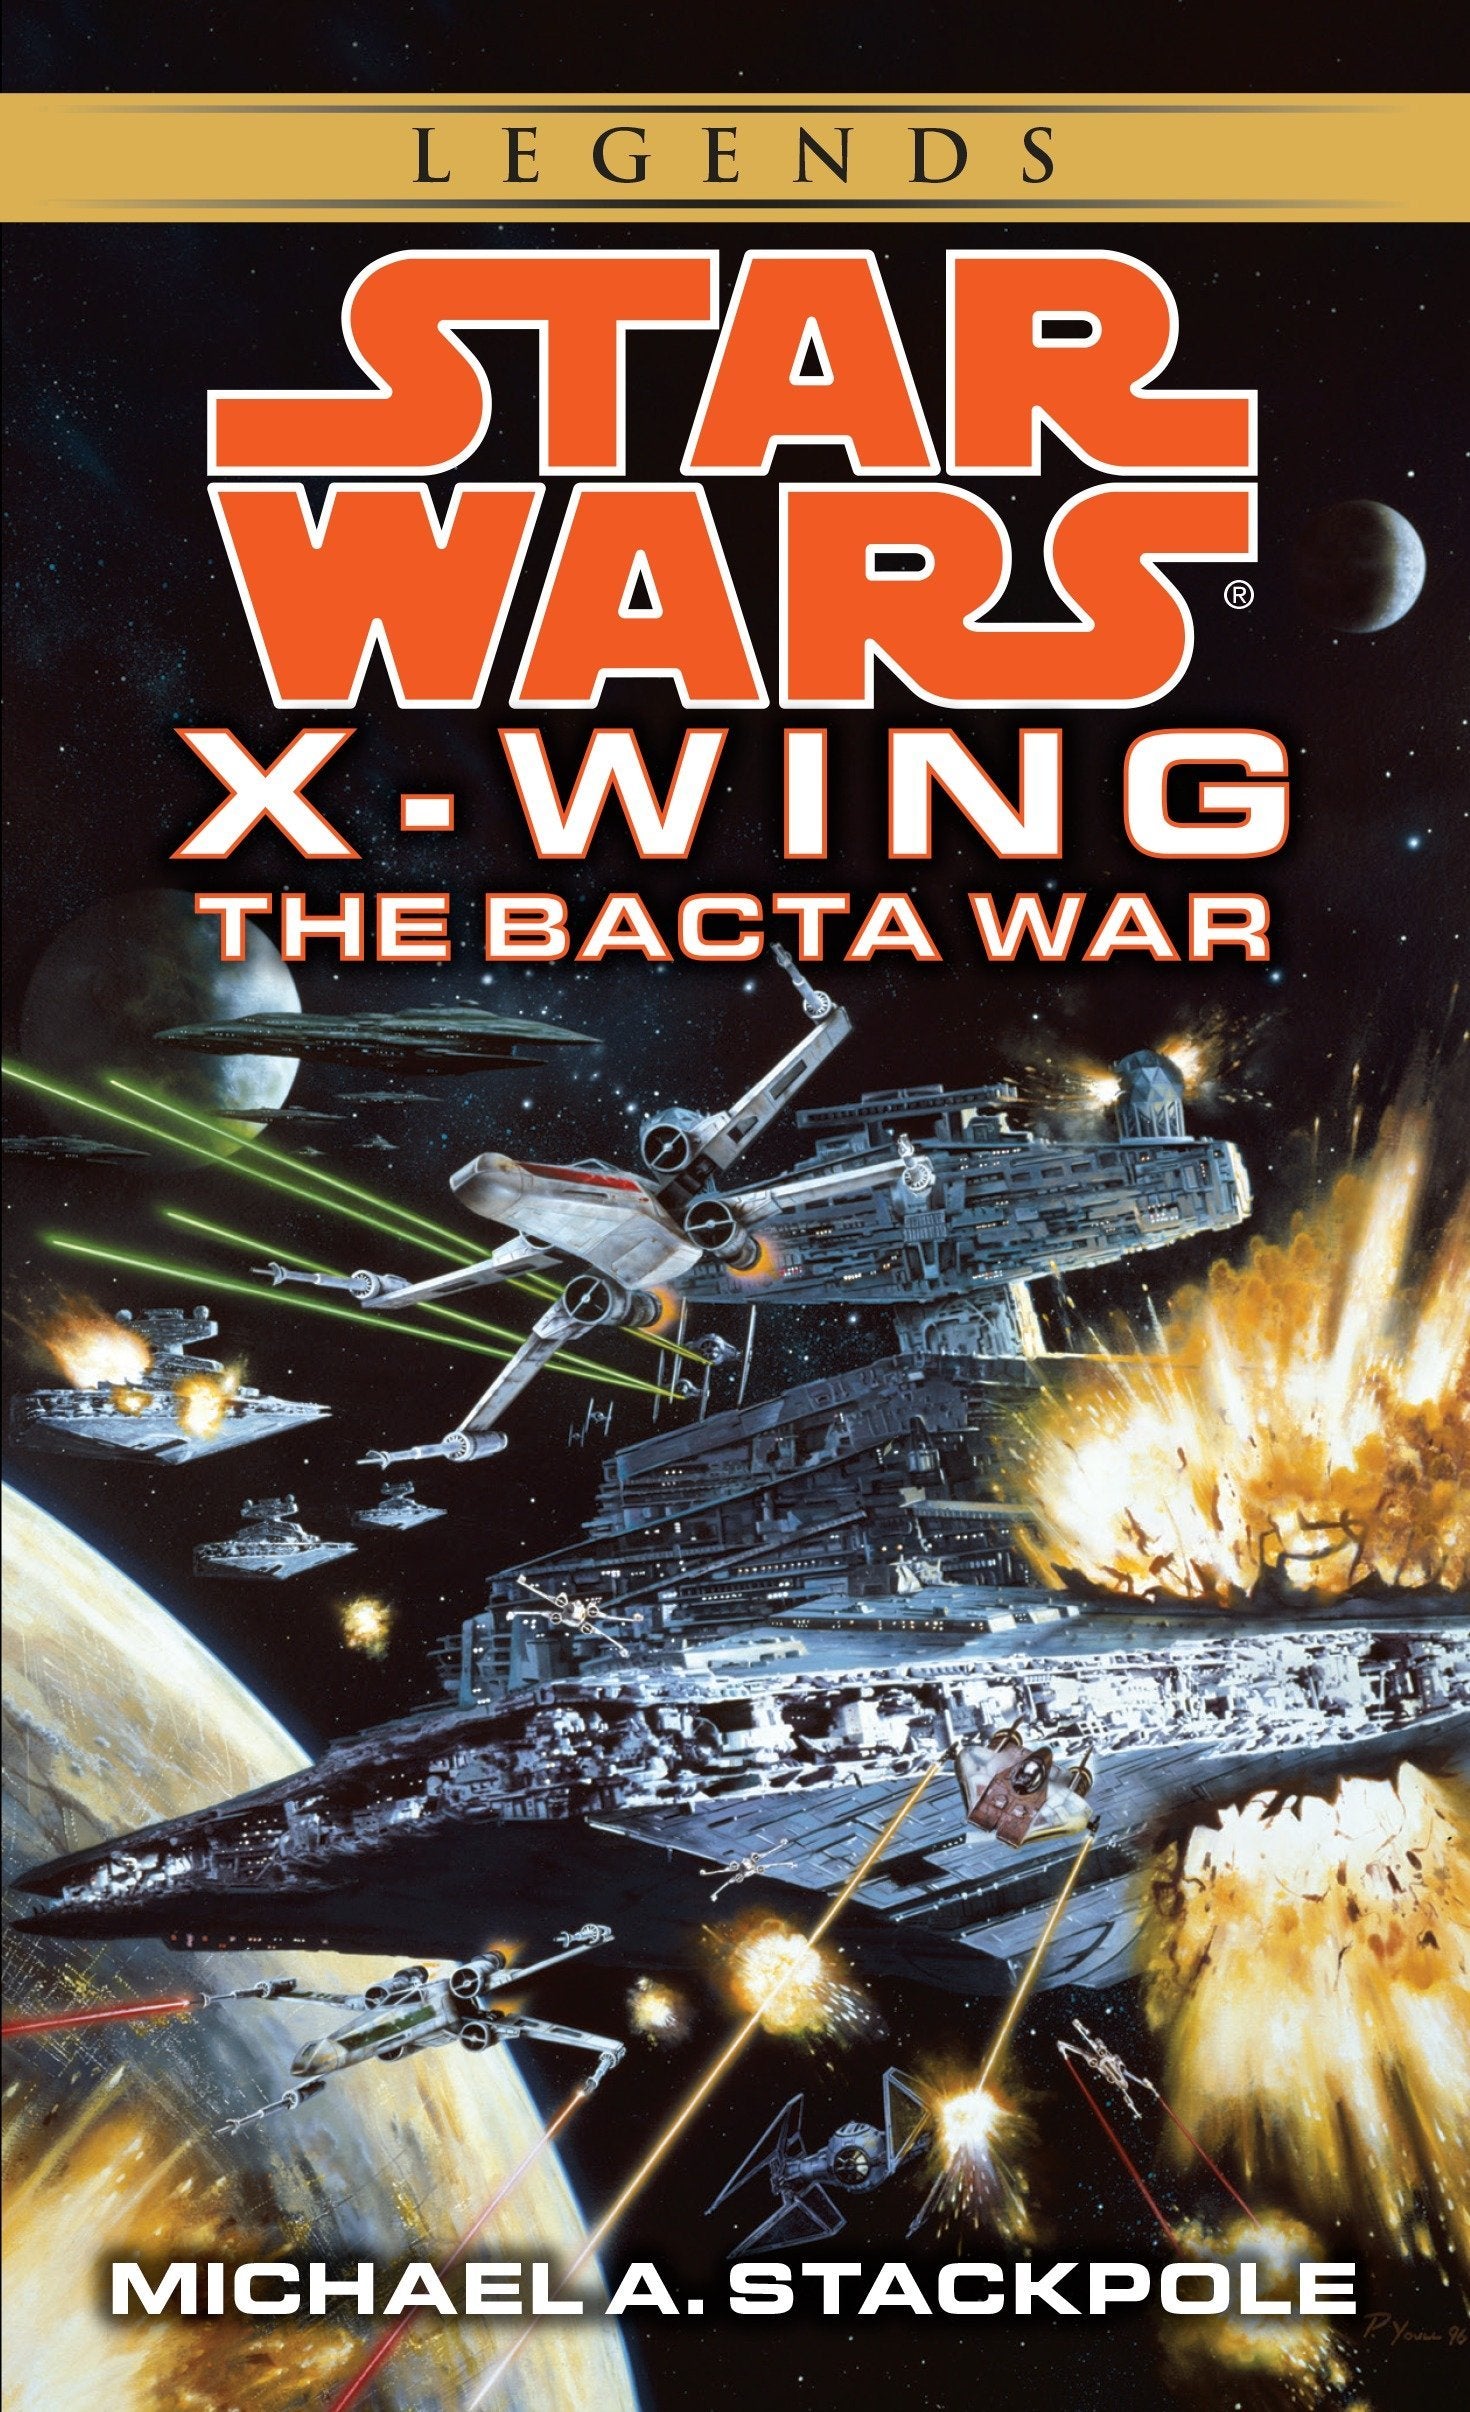 Livre ISBN 0553568043 Star Wars Legends : X-Wing # 4 : The Bacta War (Michael A. Stackpole)